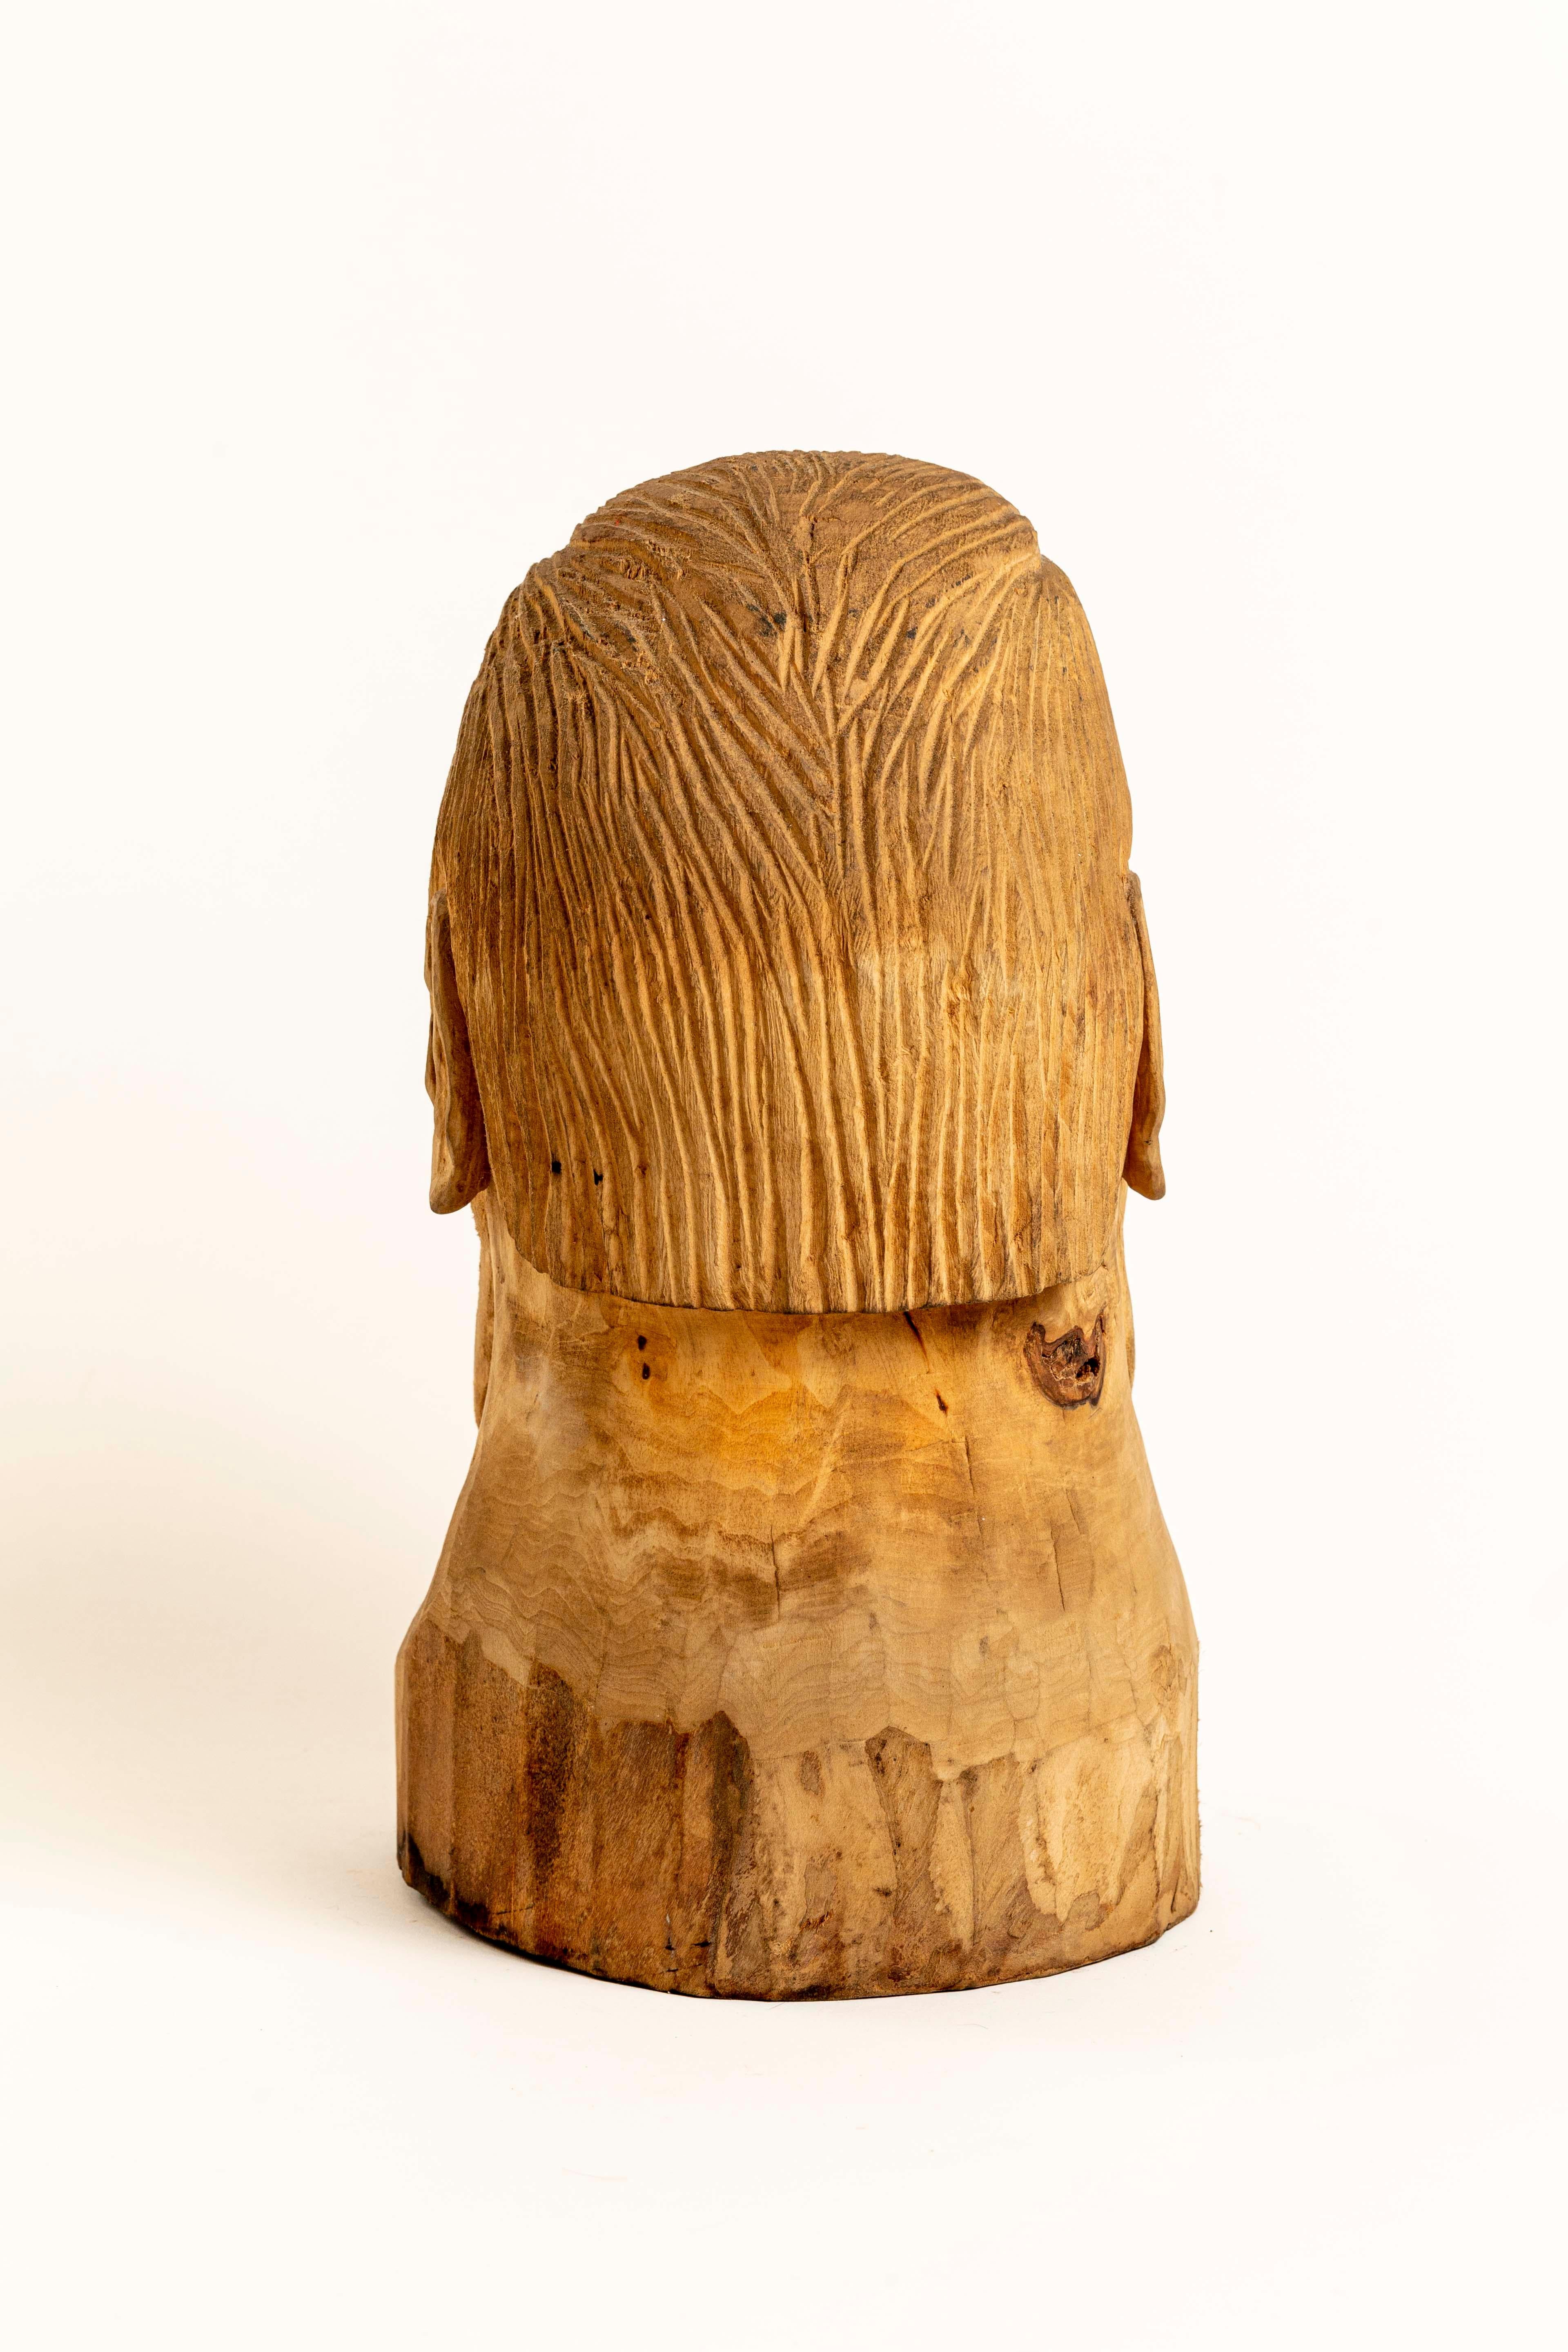 20th Century Hand Carved Wood Folk Art Sculpture by Duane Hansen For Sale 2